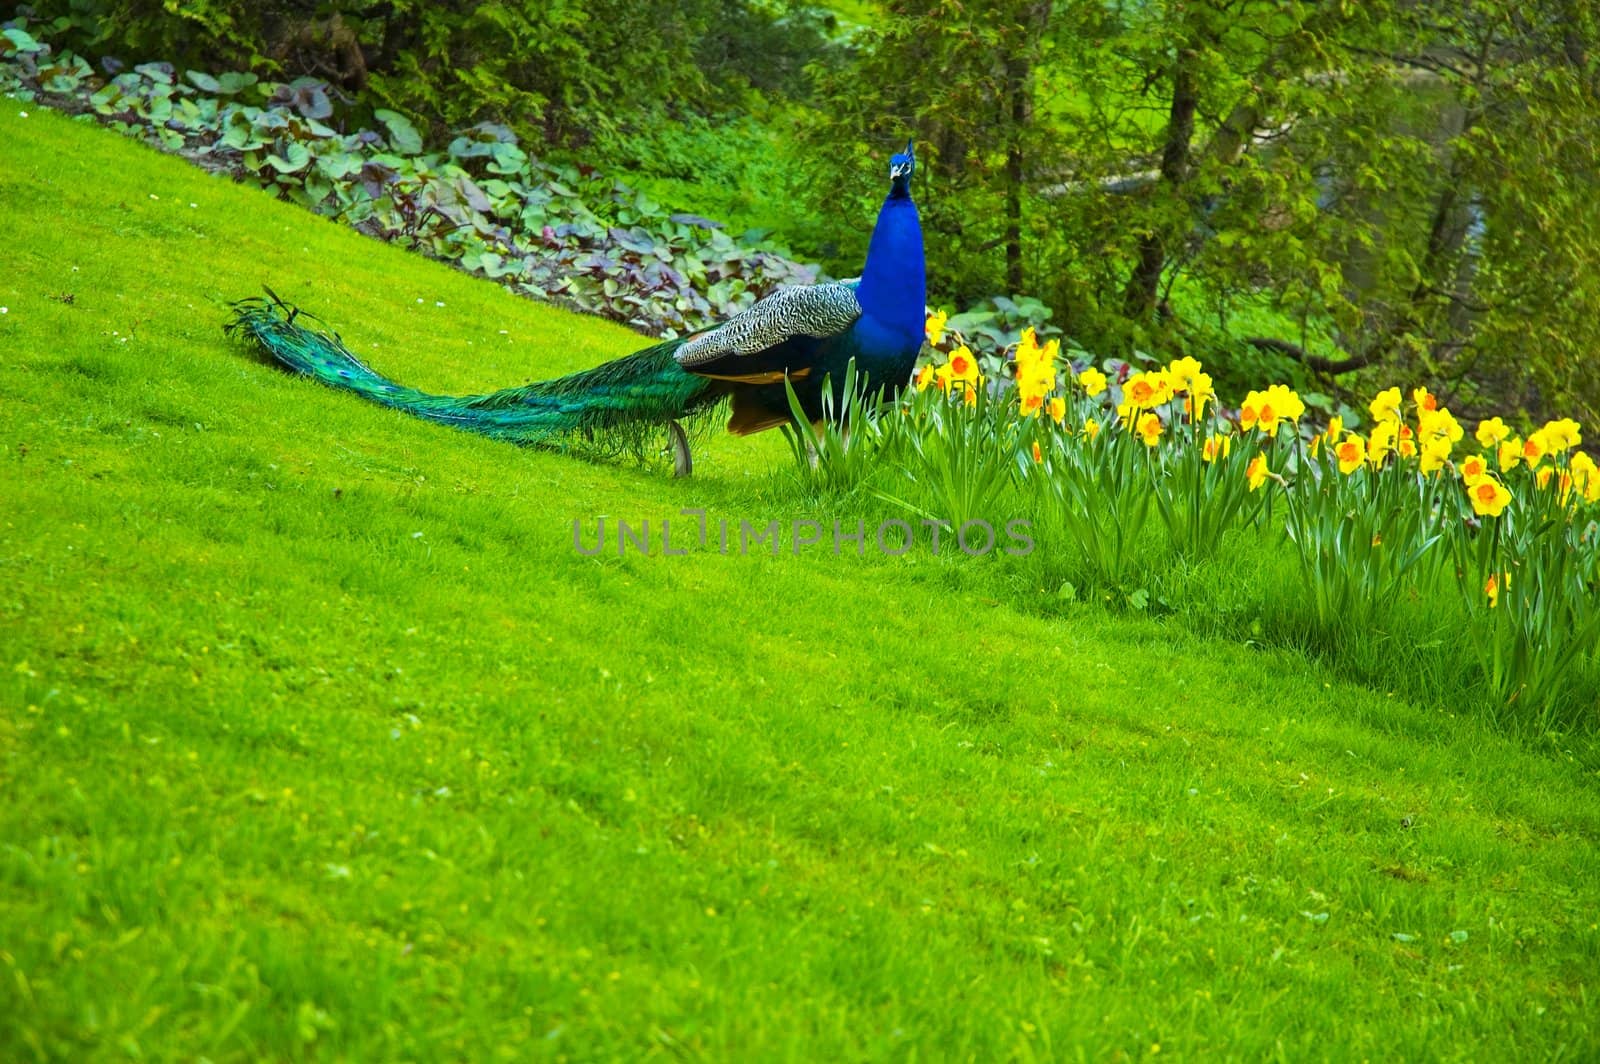 Peacock by Michalowski